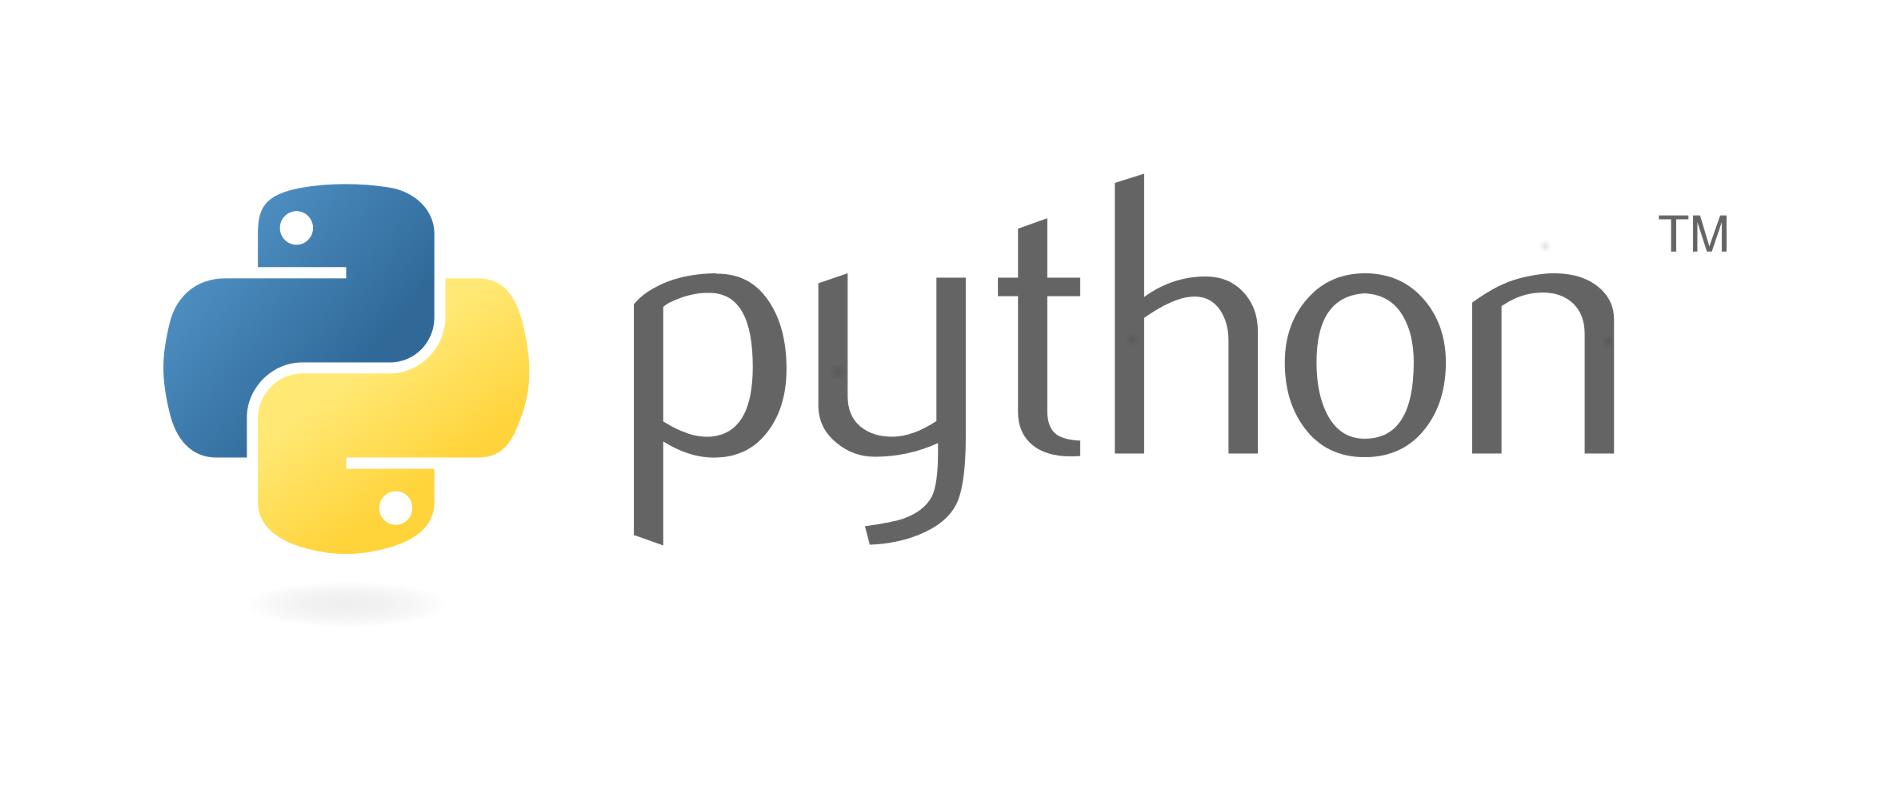 【Python】任意のキーワードのニュース一覧を取得。Google検索を使って【スクレイピング】